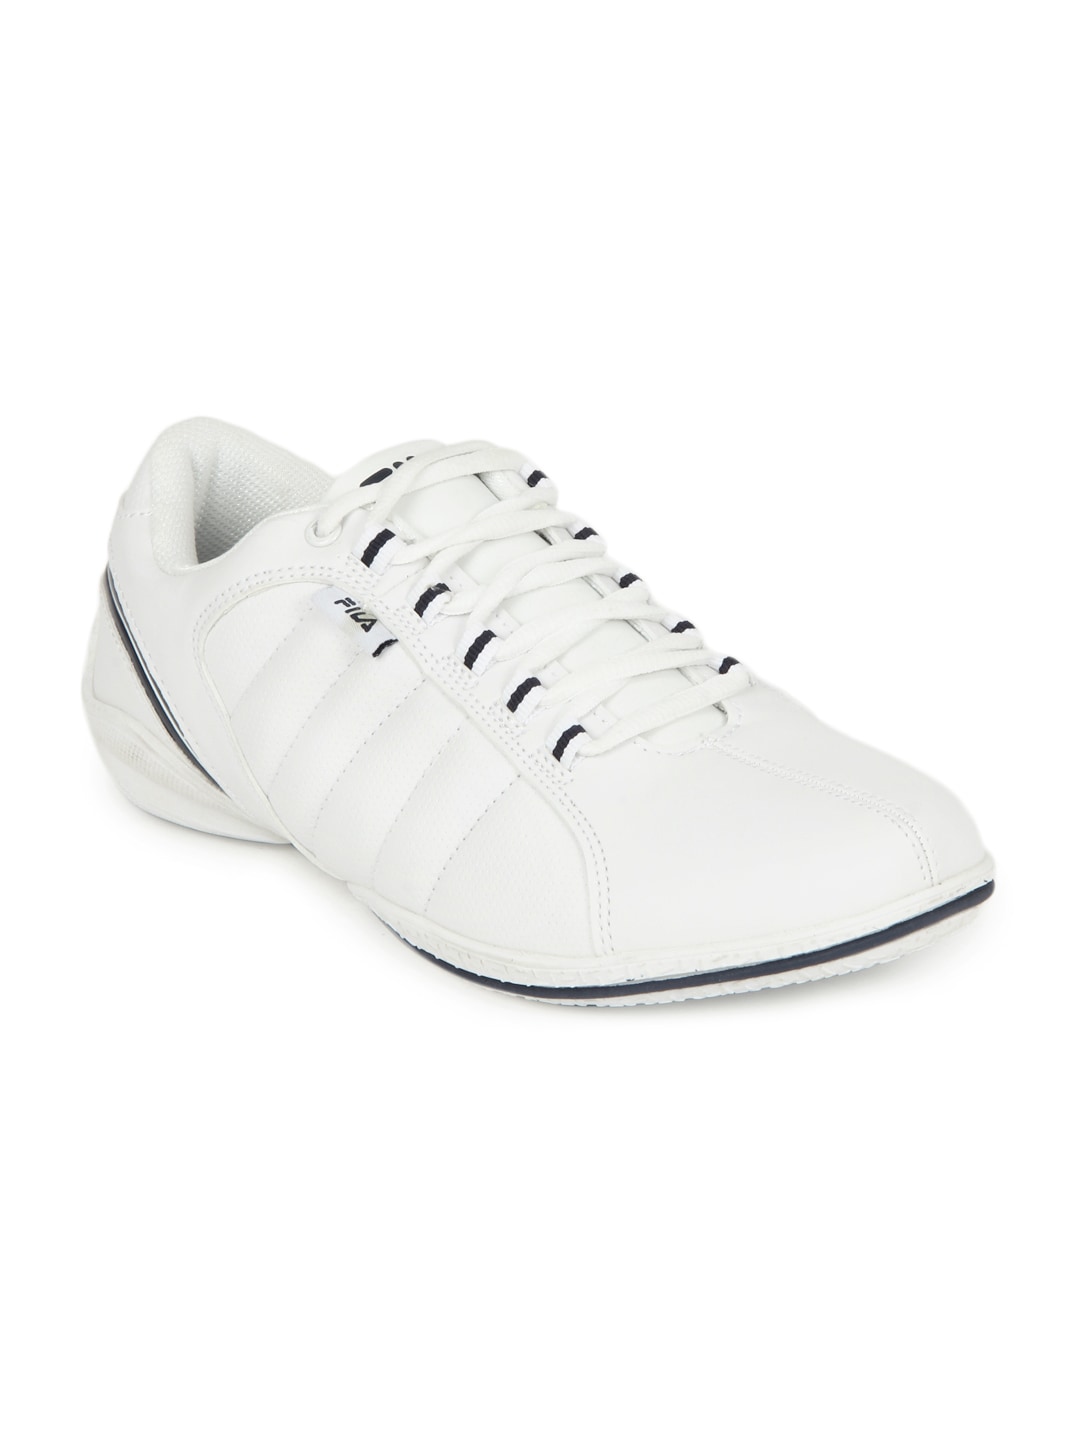 Fila Men White Mercury Casual Shoes